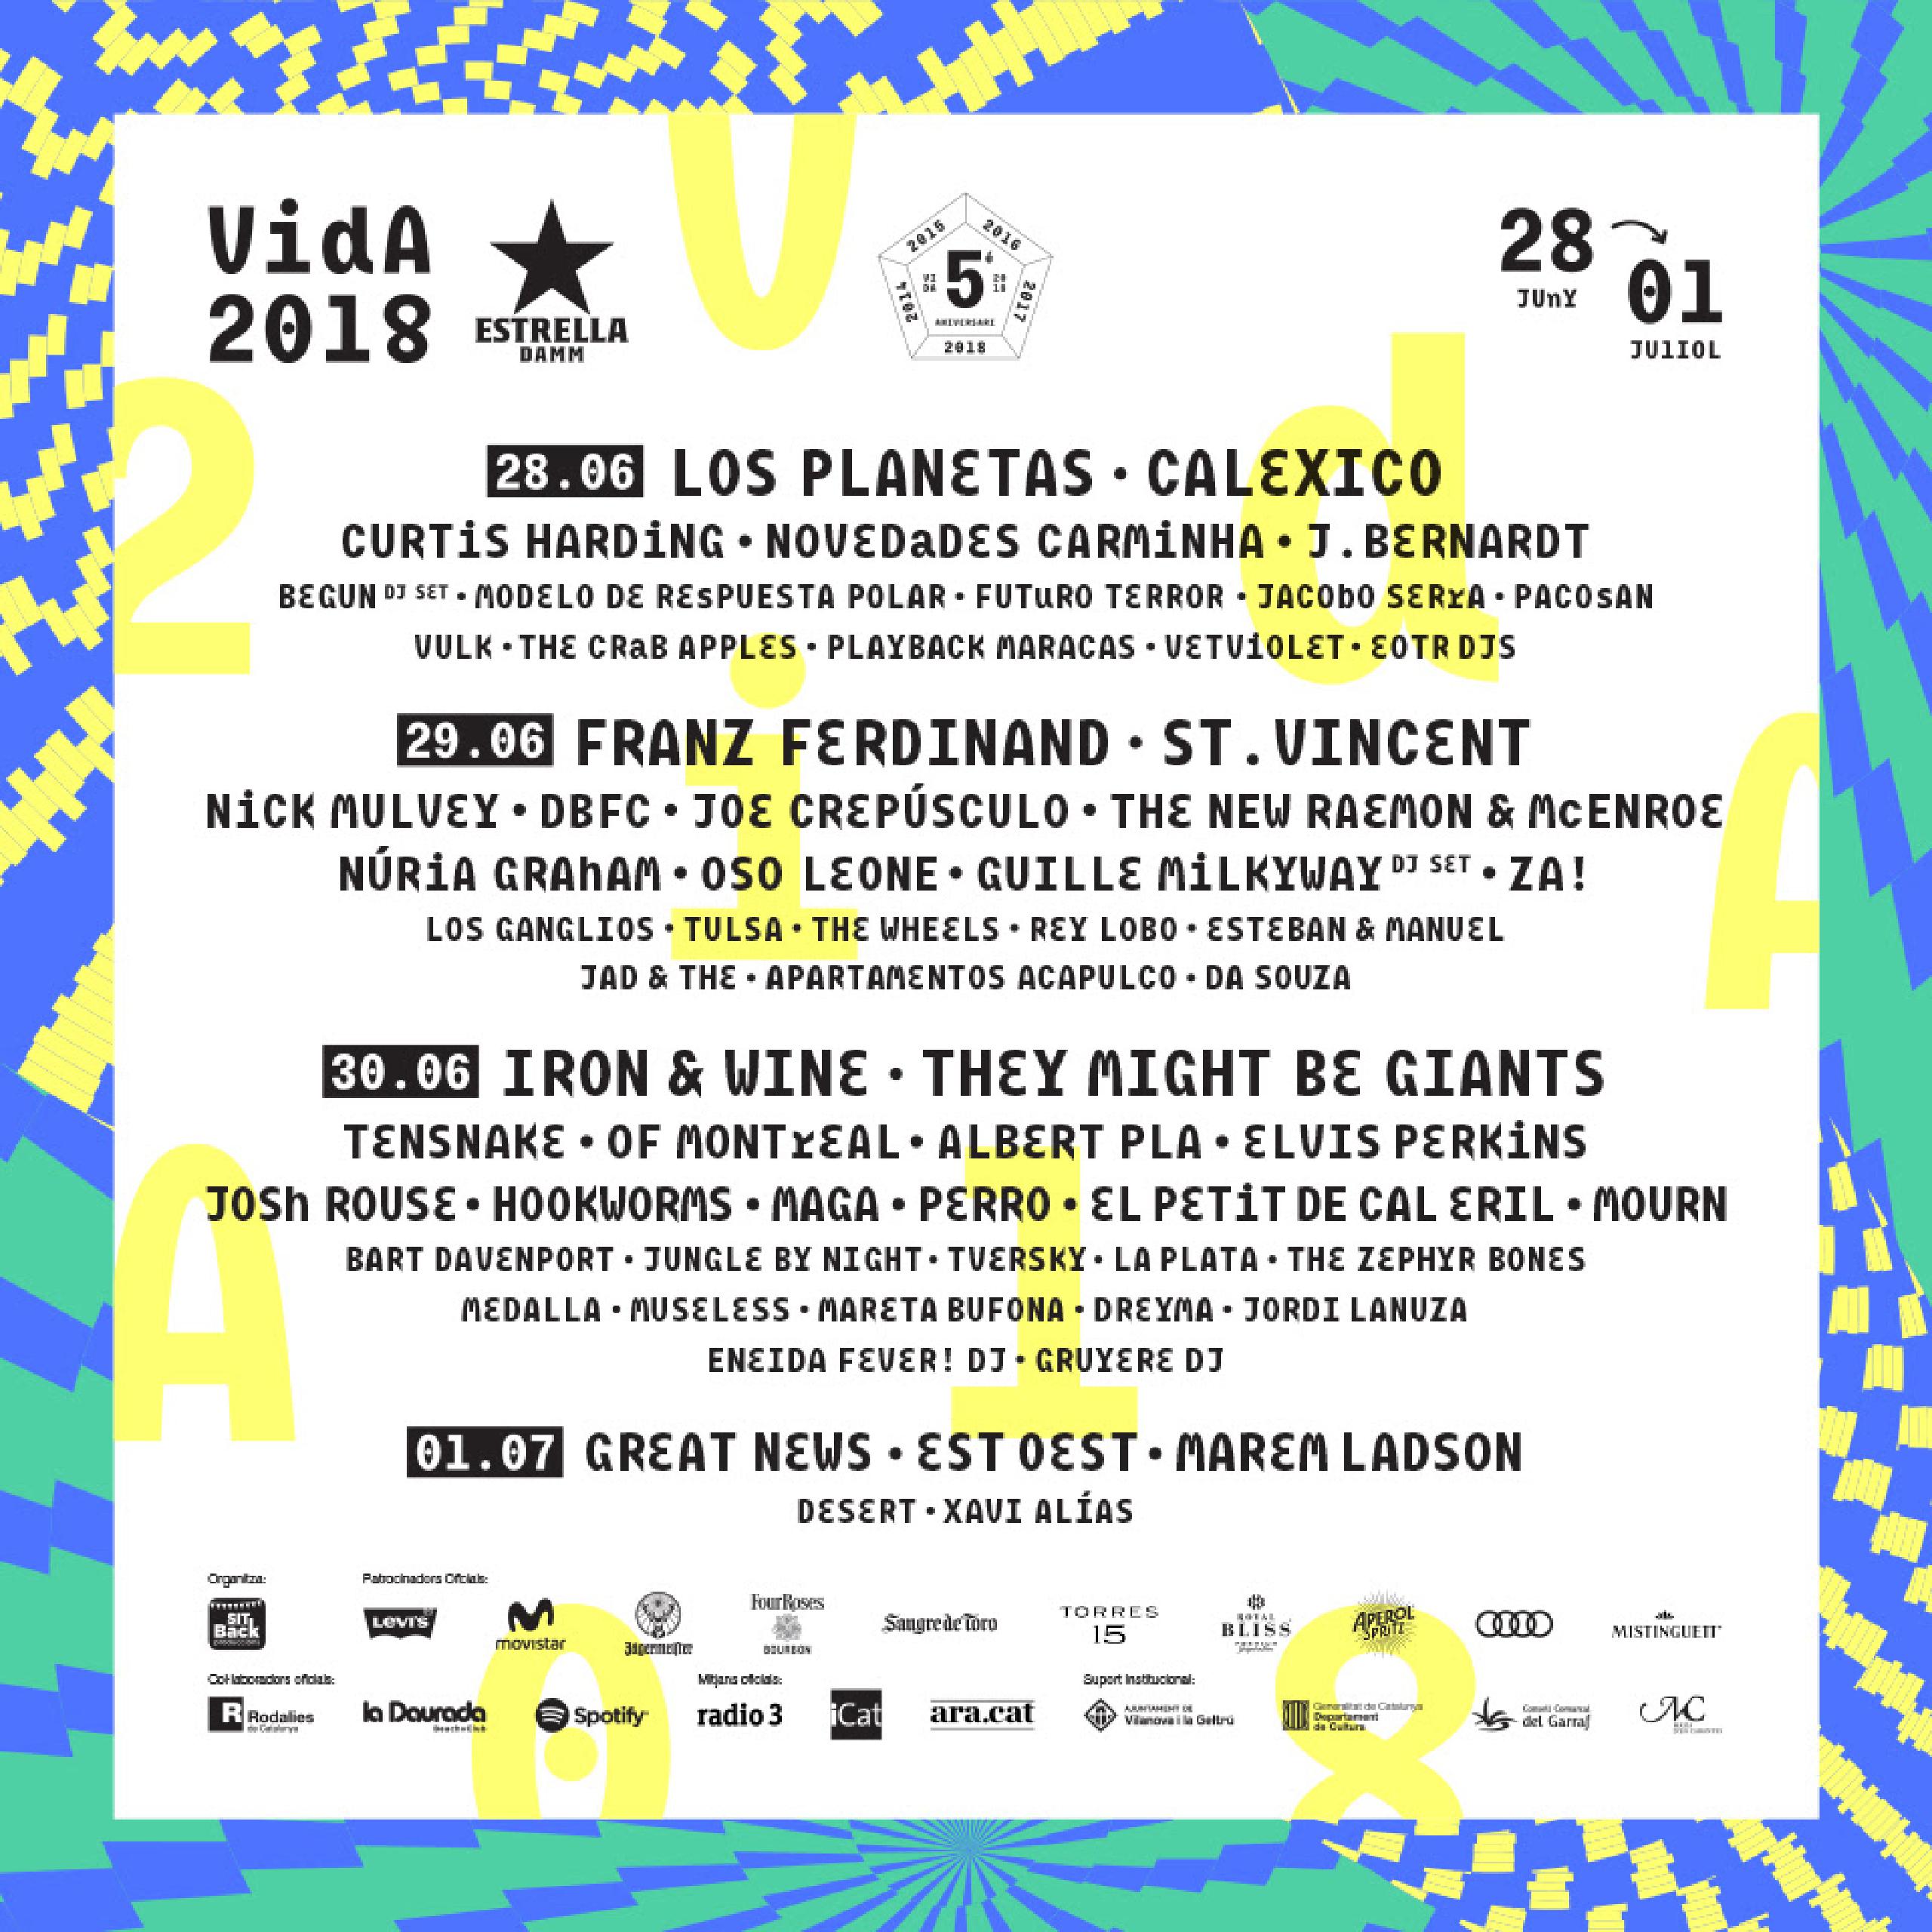 Vida Festival Barcelona, barcelona festivals 2018